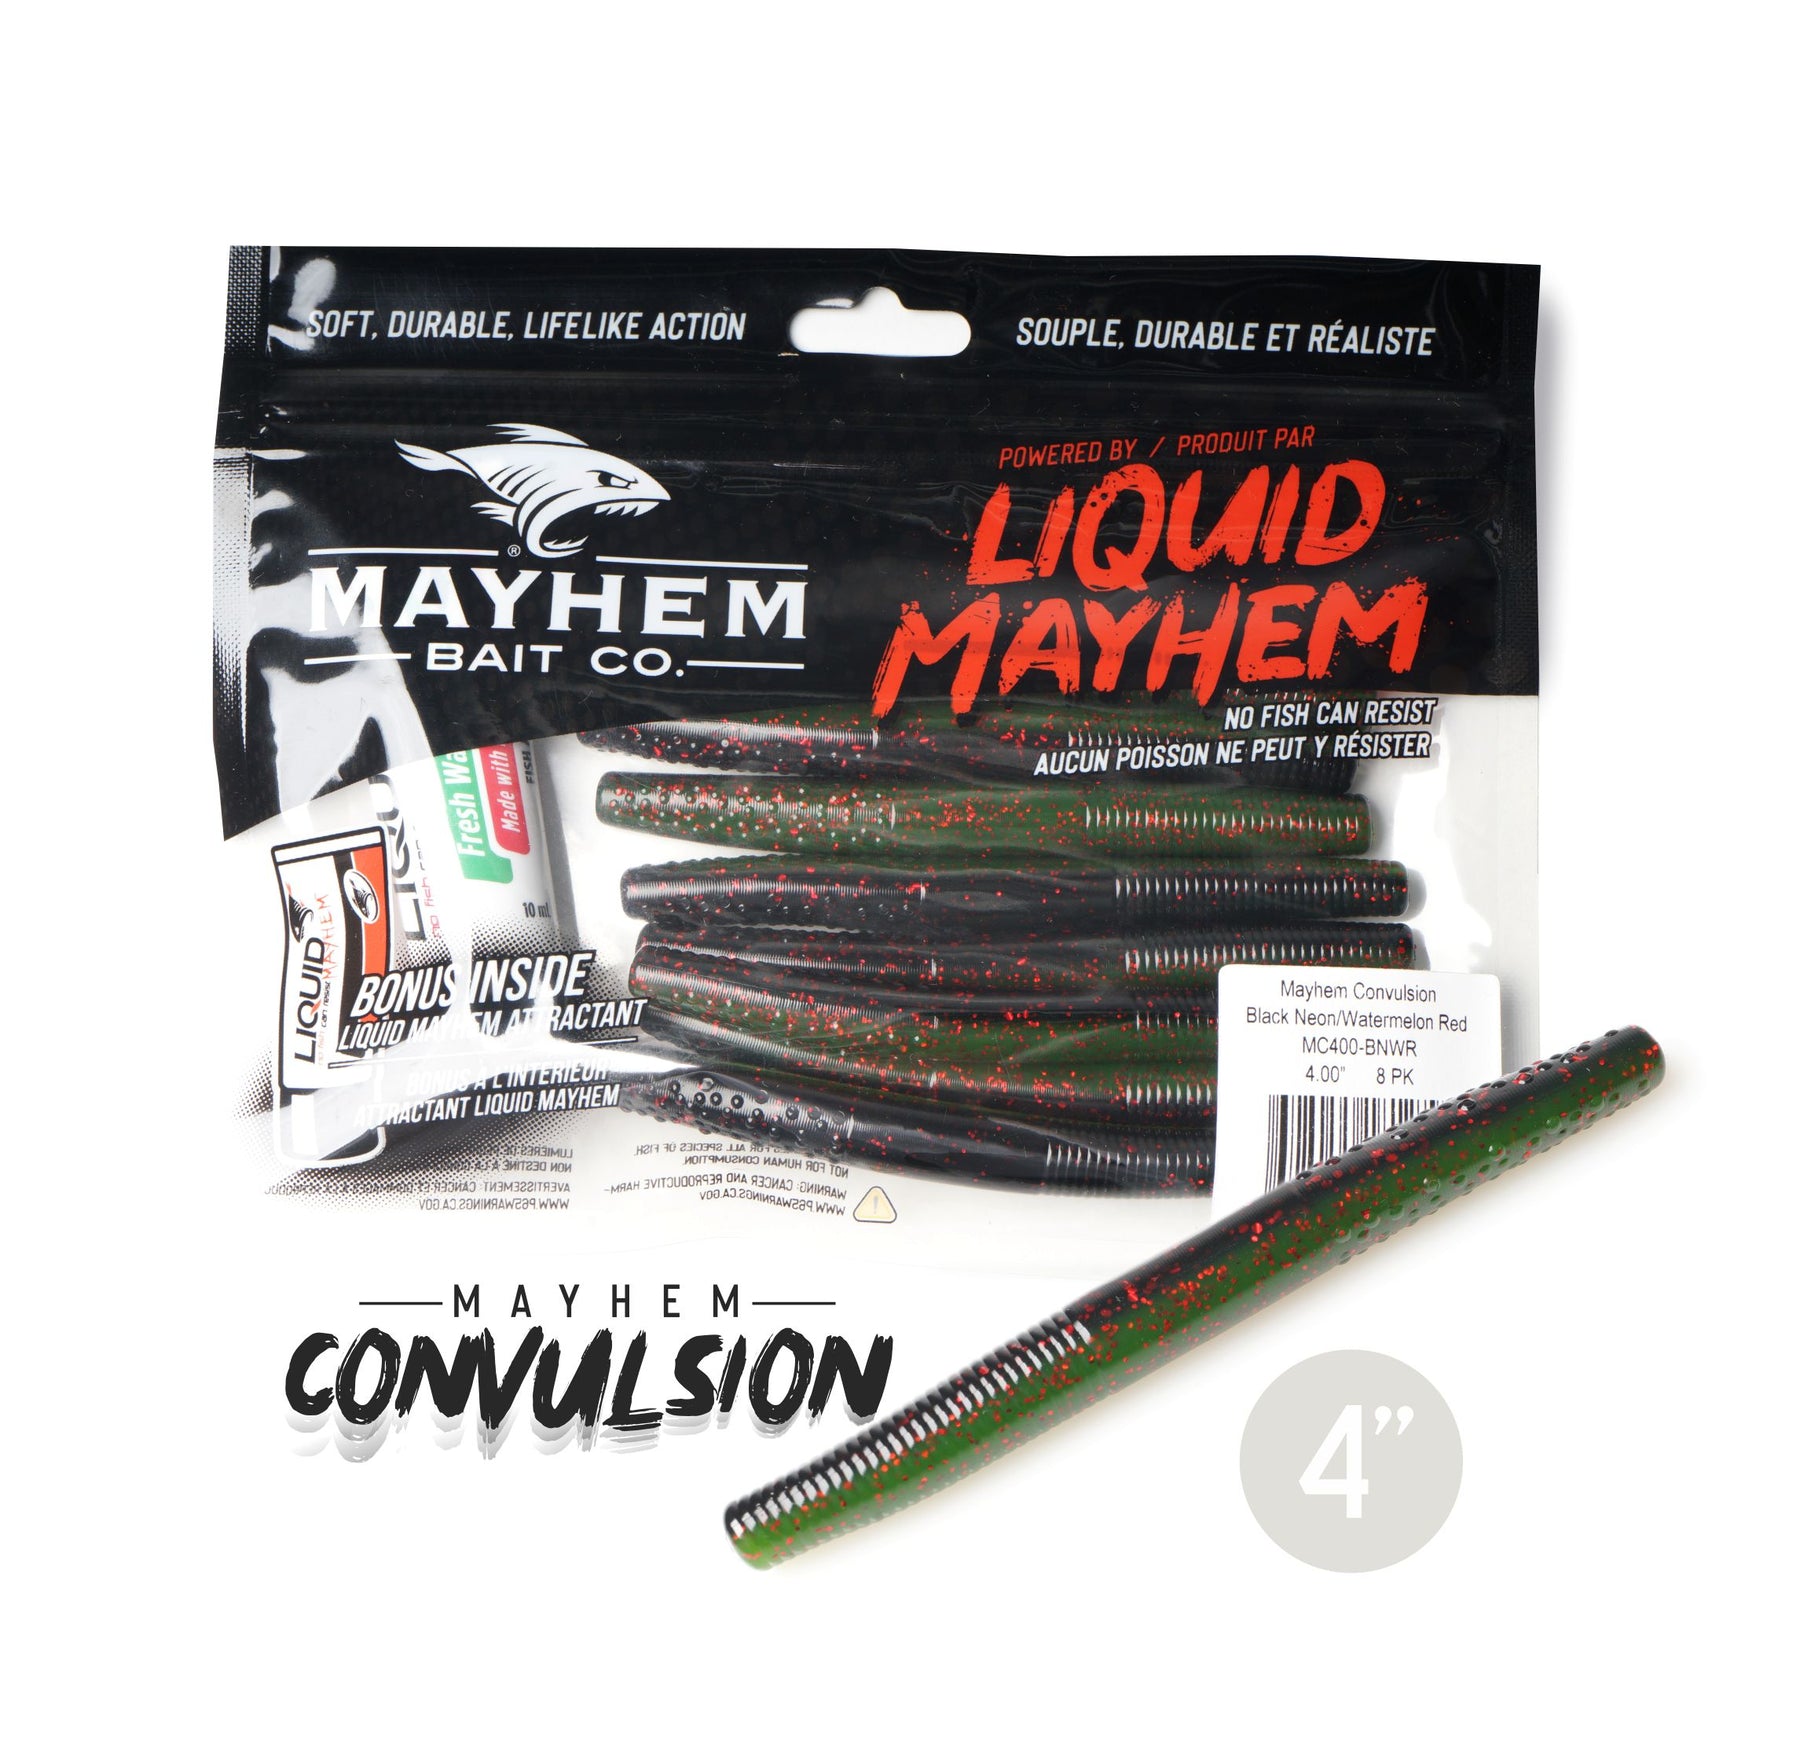 Mayhem Convulsion – LIQUID MAYHEM